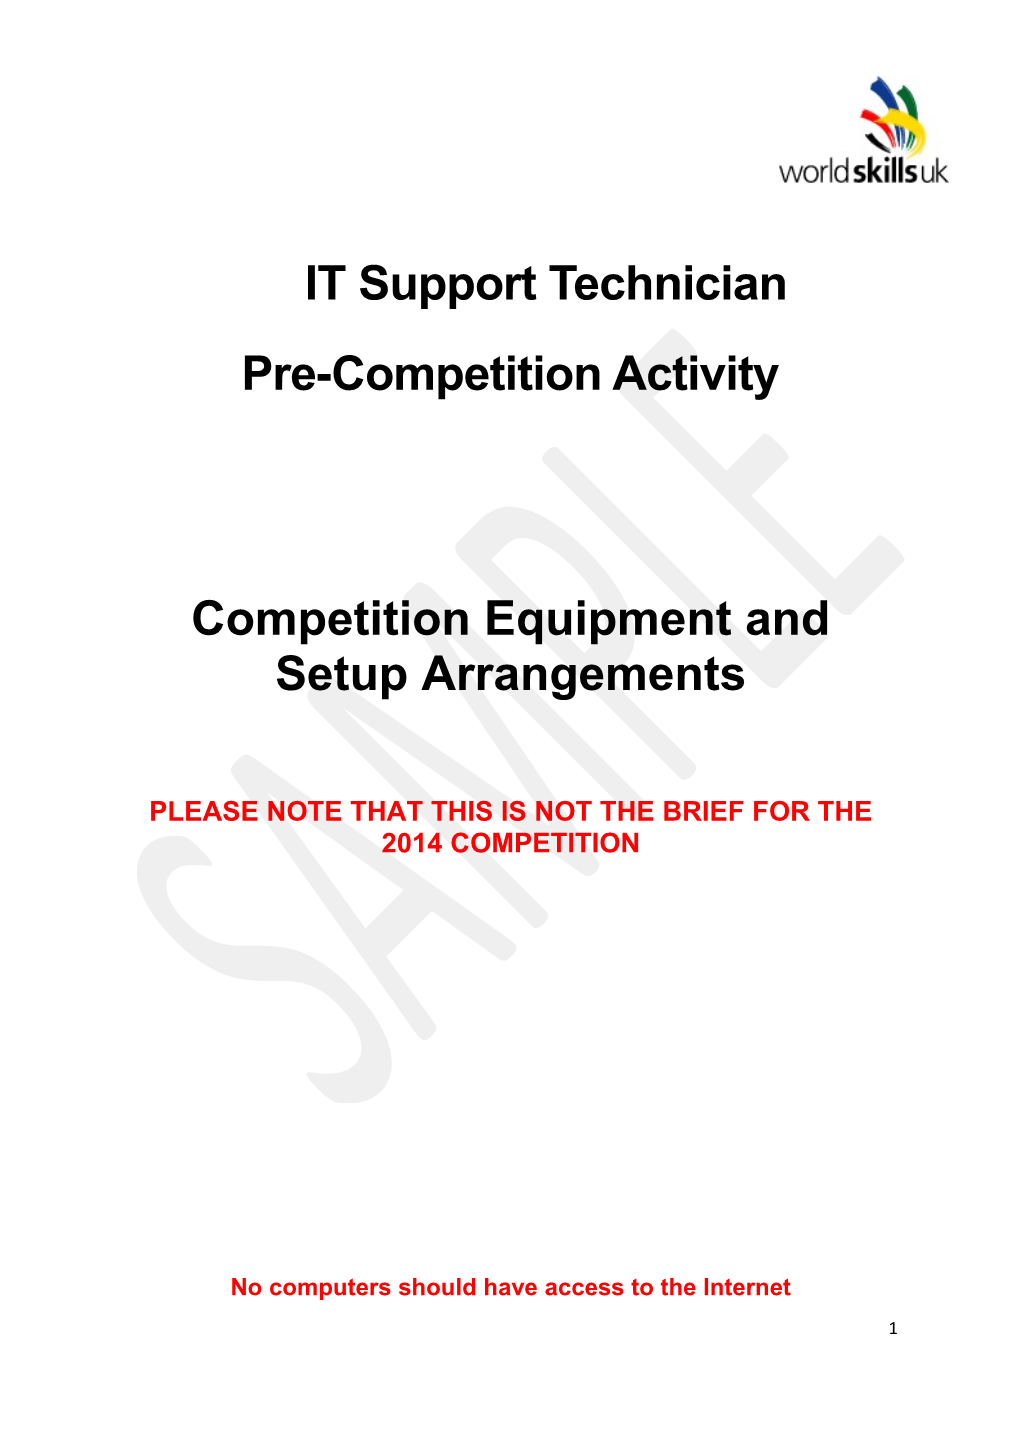 Competition Equipment and Setup Arrangements